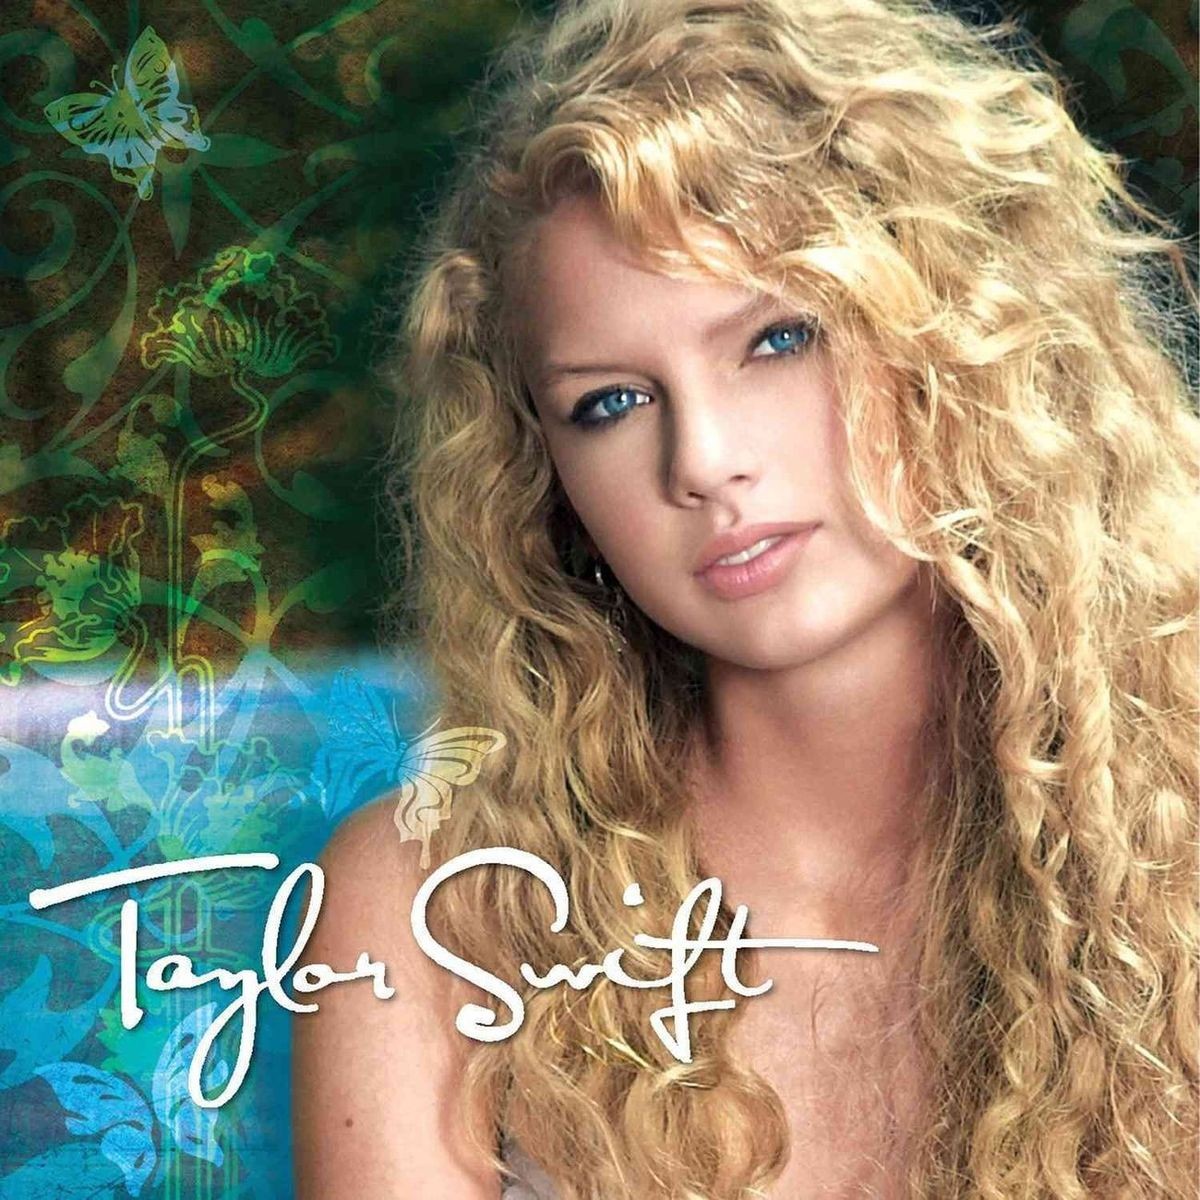 <p>We don't know how many bonus tracks <em>Taylor Swift (Taylor's Version)</em> will have, but here's the tracklist from the original deluxe album. I'm really hoping we get "Crazier (Taylor's Version)" and maybe "You'll Always Find Your Way Back Home (Taylor's Version)." Both of these songs were in <em><strong><a href="https://www.brit.co/hannah-montana-best-moments/">Hannah Montana: The Movie</a></strong></em> and I unashamedly love them.</p><ol><li>"Tim McGraw"</li><li>"Picture to Burn"</li><li>"Teardrops on My Guitar"</li><li>"A Place in This World"</li><li>"Cold as You"</li><li>"The Outside" </li><li>"Tied Together with a Smile"</li><li>"Stay Beautiful"</li><li>"Should've Said No"</li><li>"Mary's Song (Oh My My My)"</li><li>"Our Song"</li><li>"I'm Only Me When I'm with You"</li><li>"Invisible"</li><li>"A Perfectly Good Heart" </li><li>Taylor Swift's 1st Phone Call with Tim McGraw</li></ol>